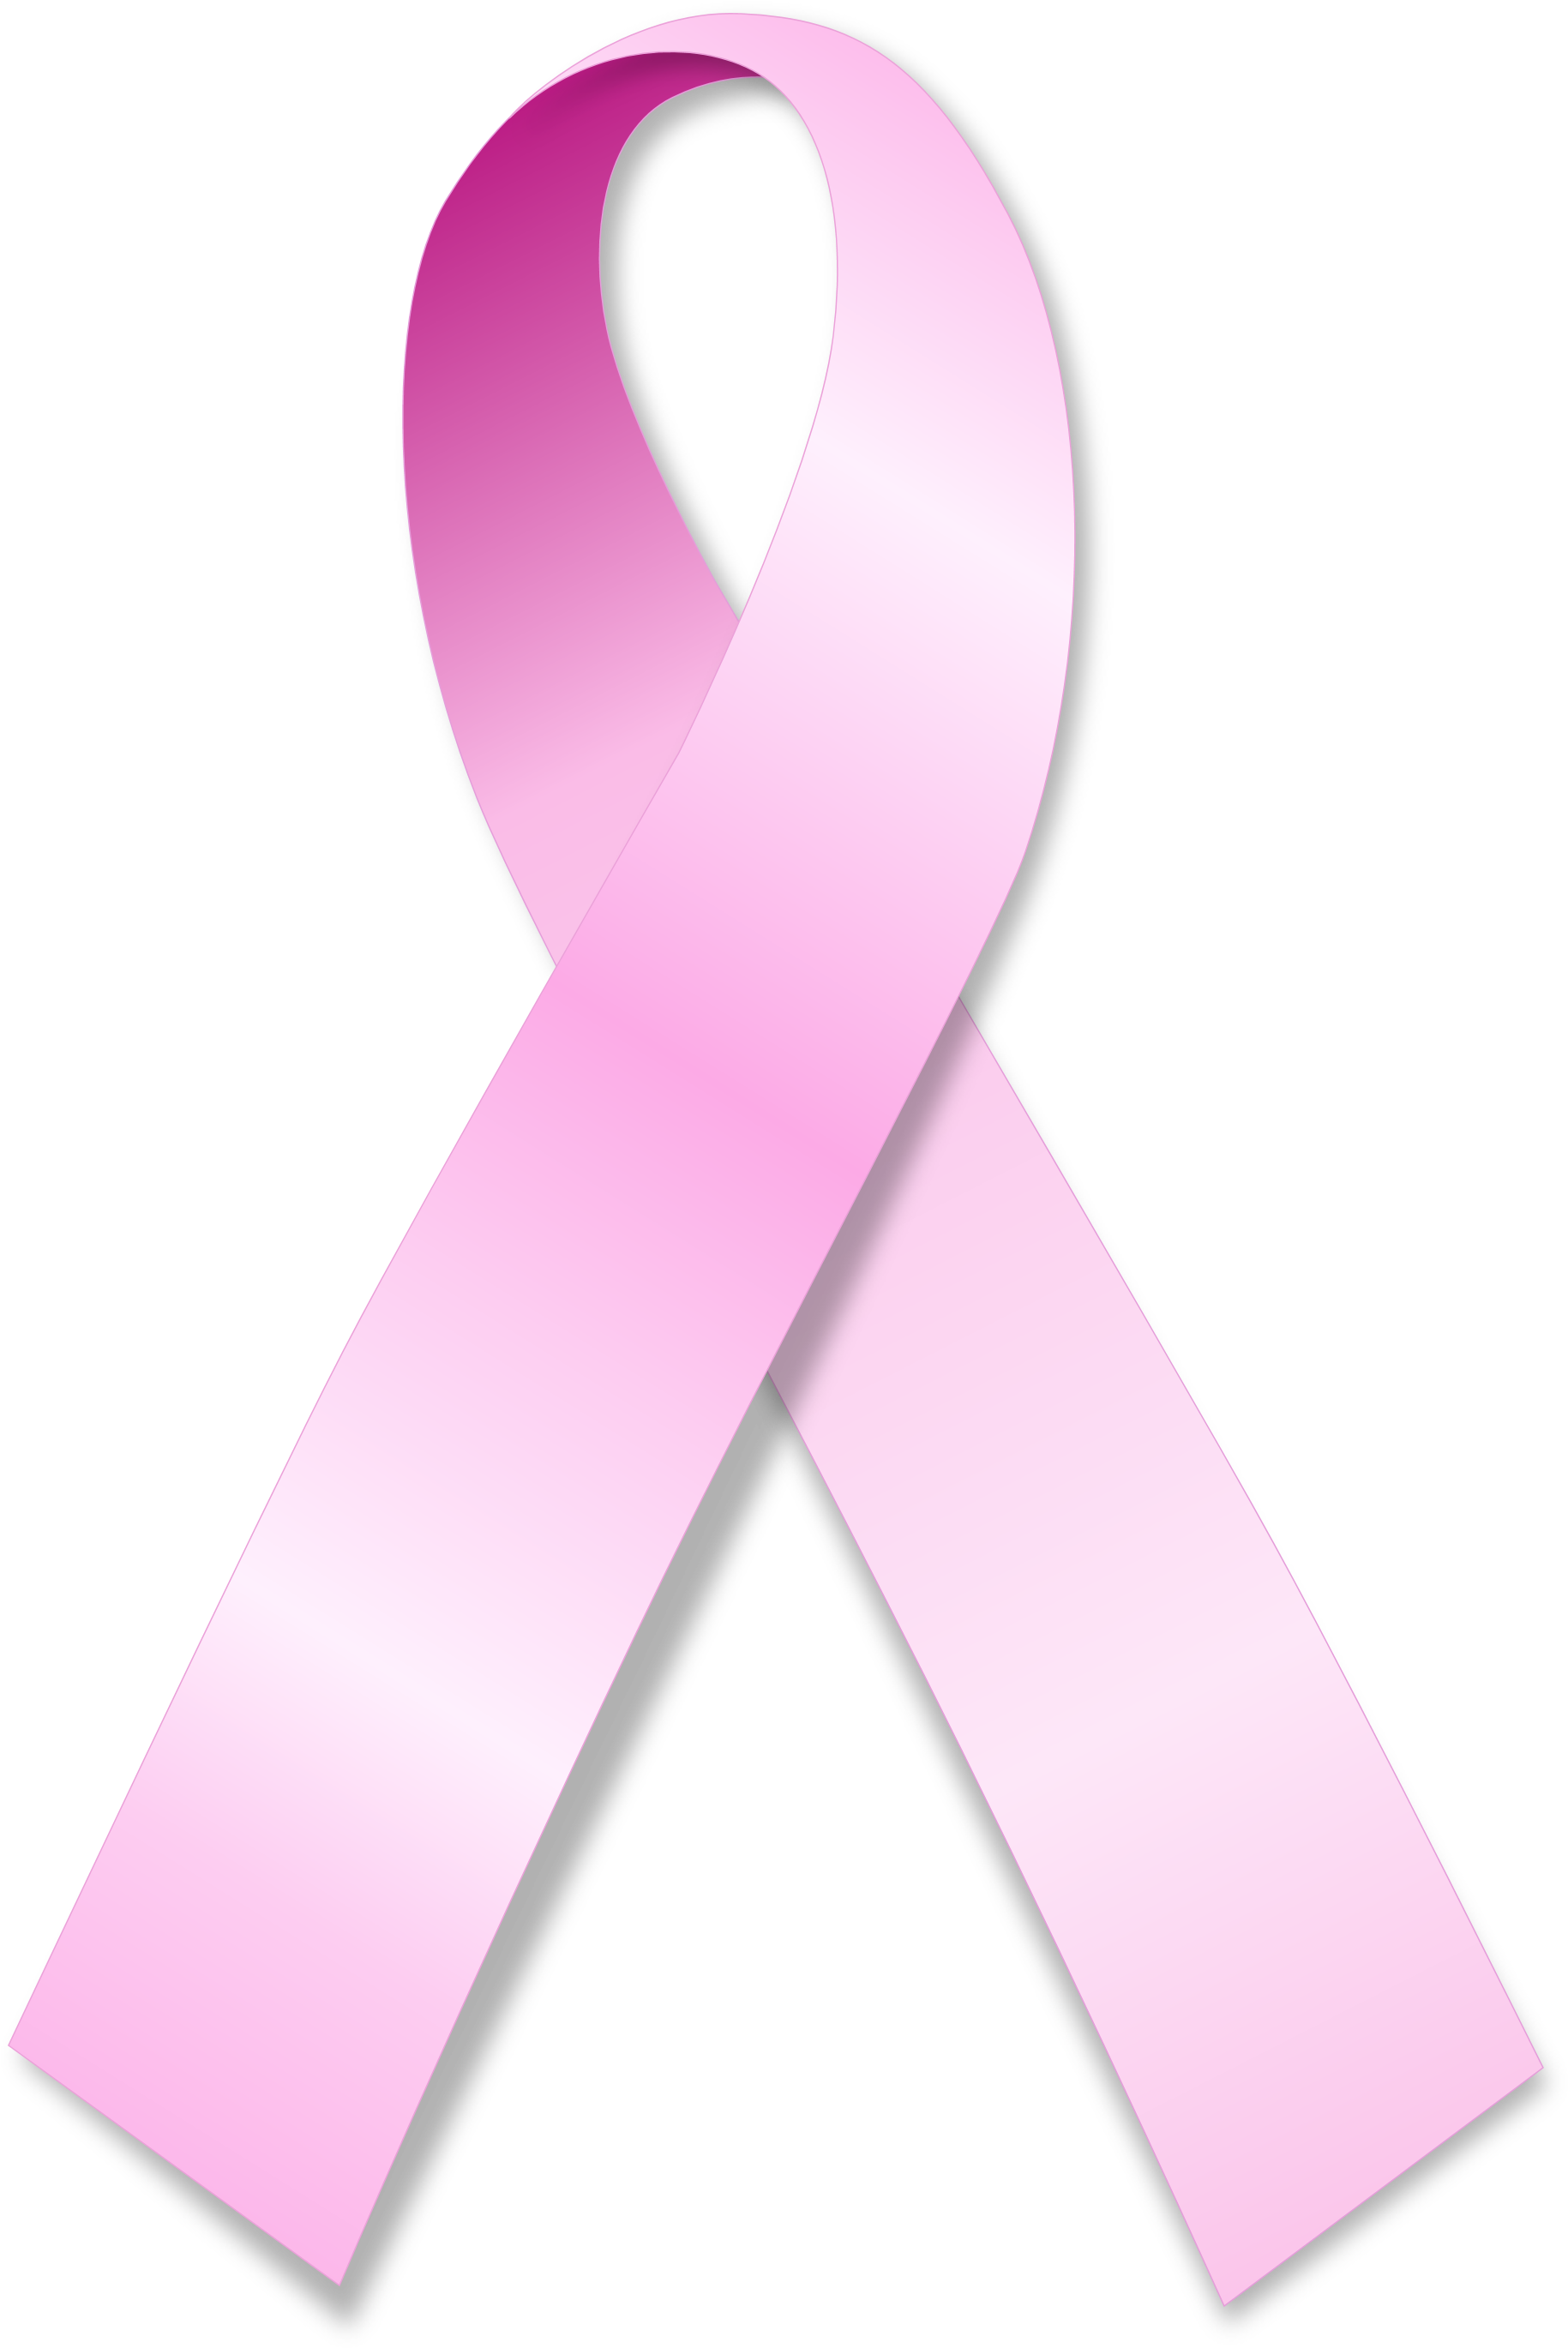 Delightful Cancer Awareness Ribbon Clip Art Medium - Breast Cancer Ribbon Transparent Background (3000x3000)